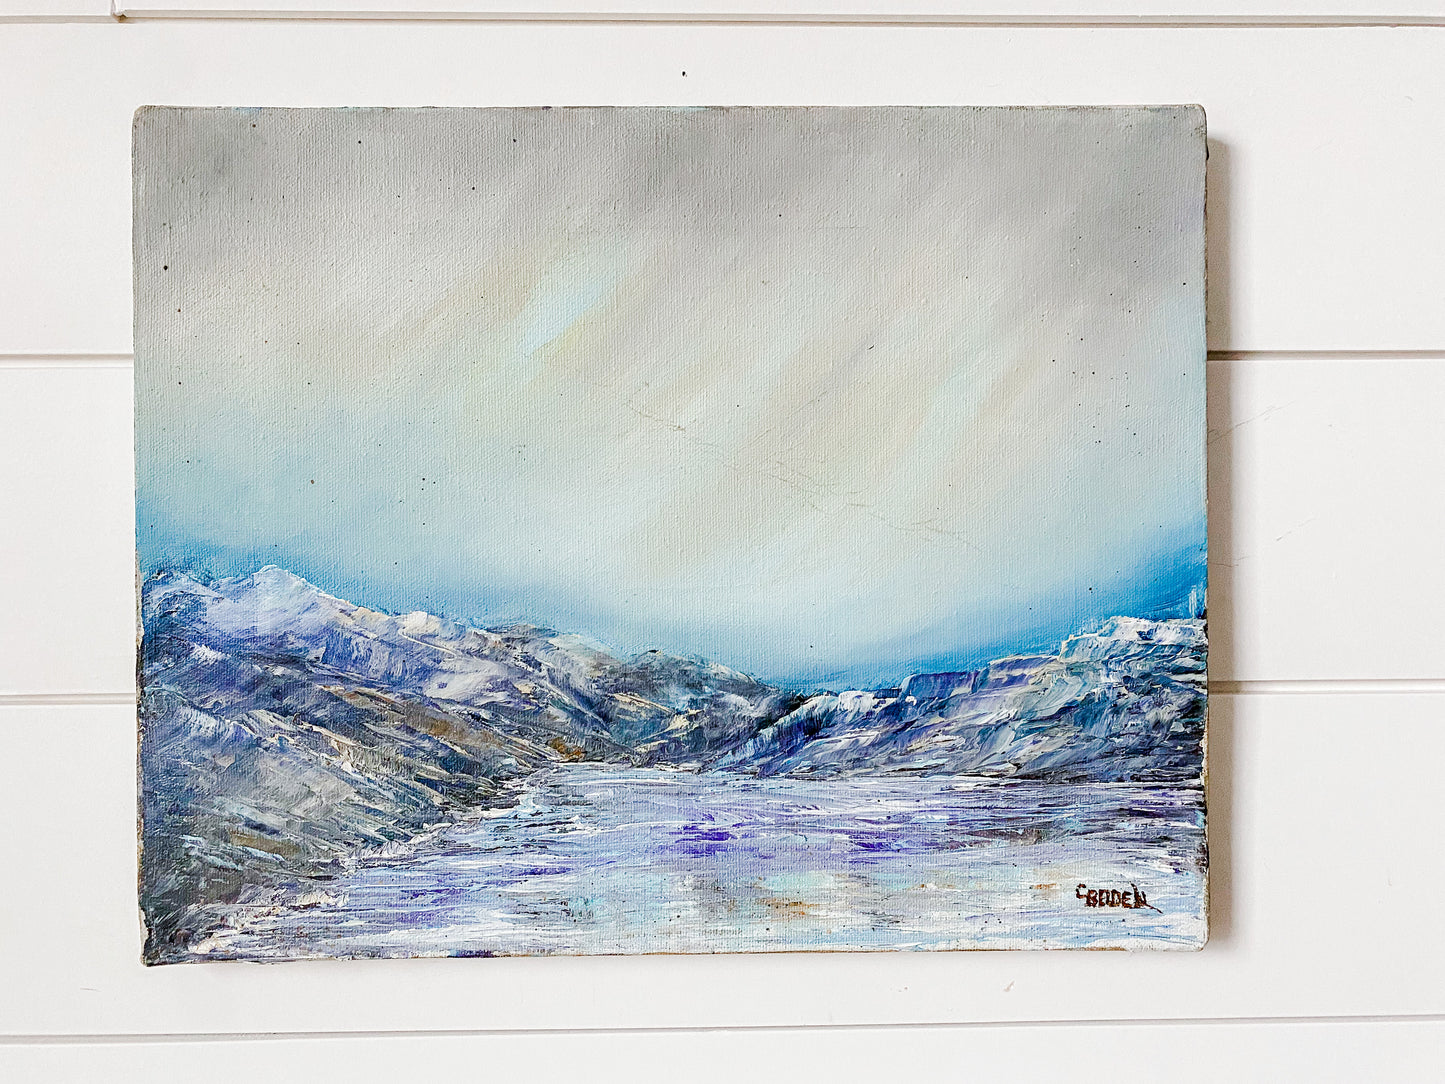 Original Oil Painting Snowy Mountain Landscape by C. Belden